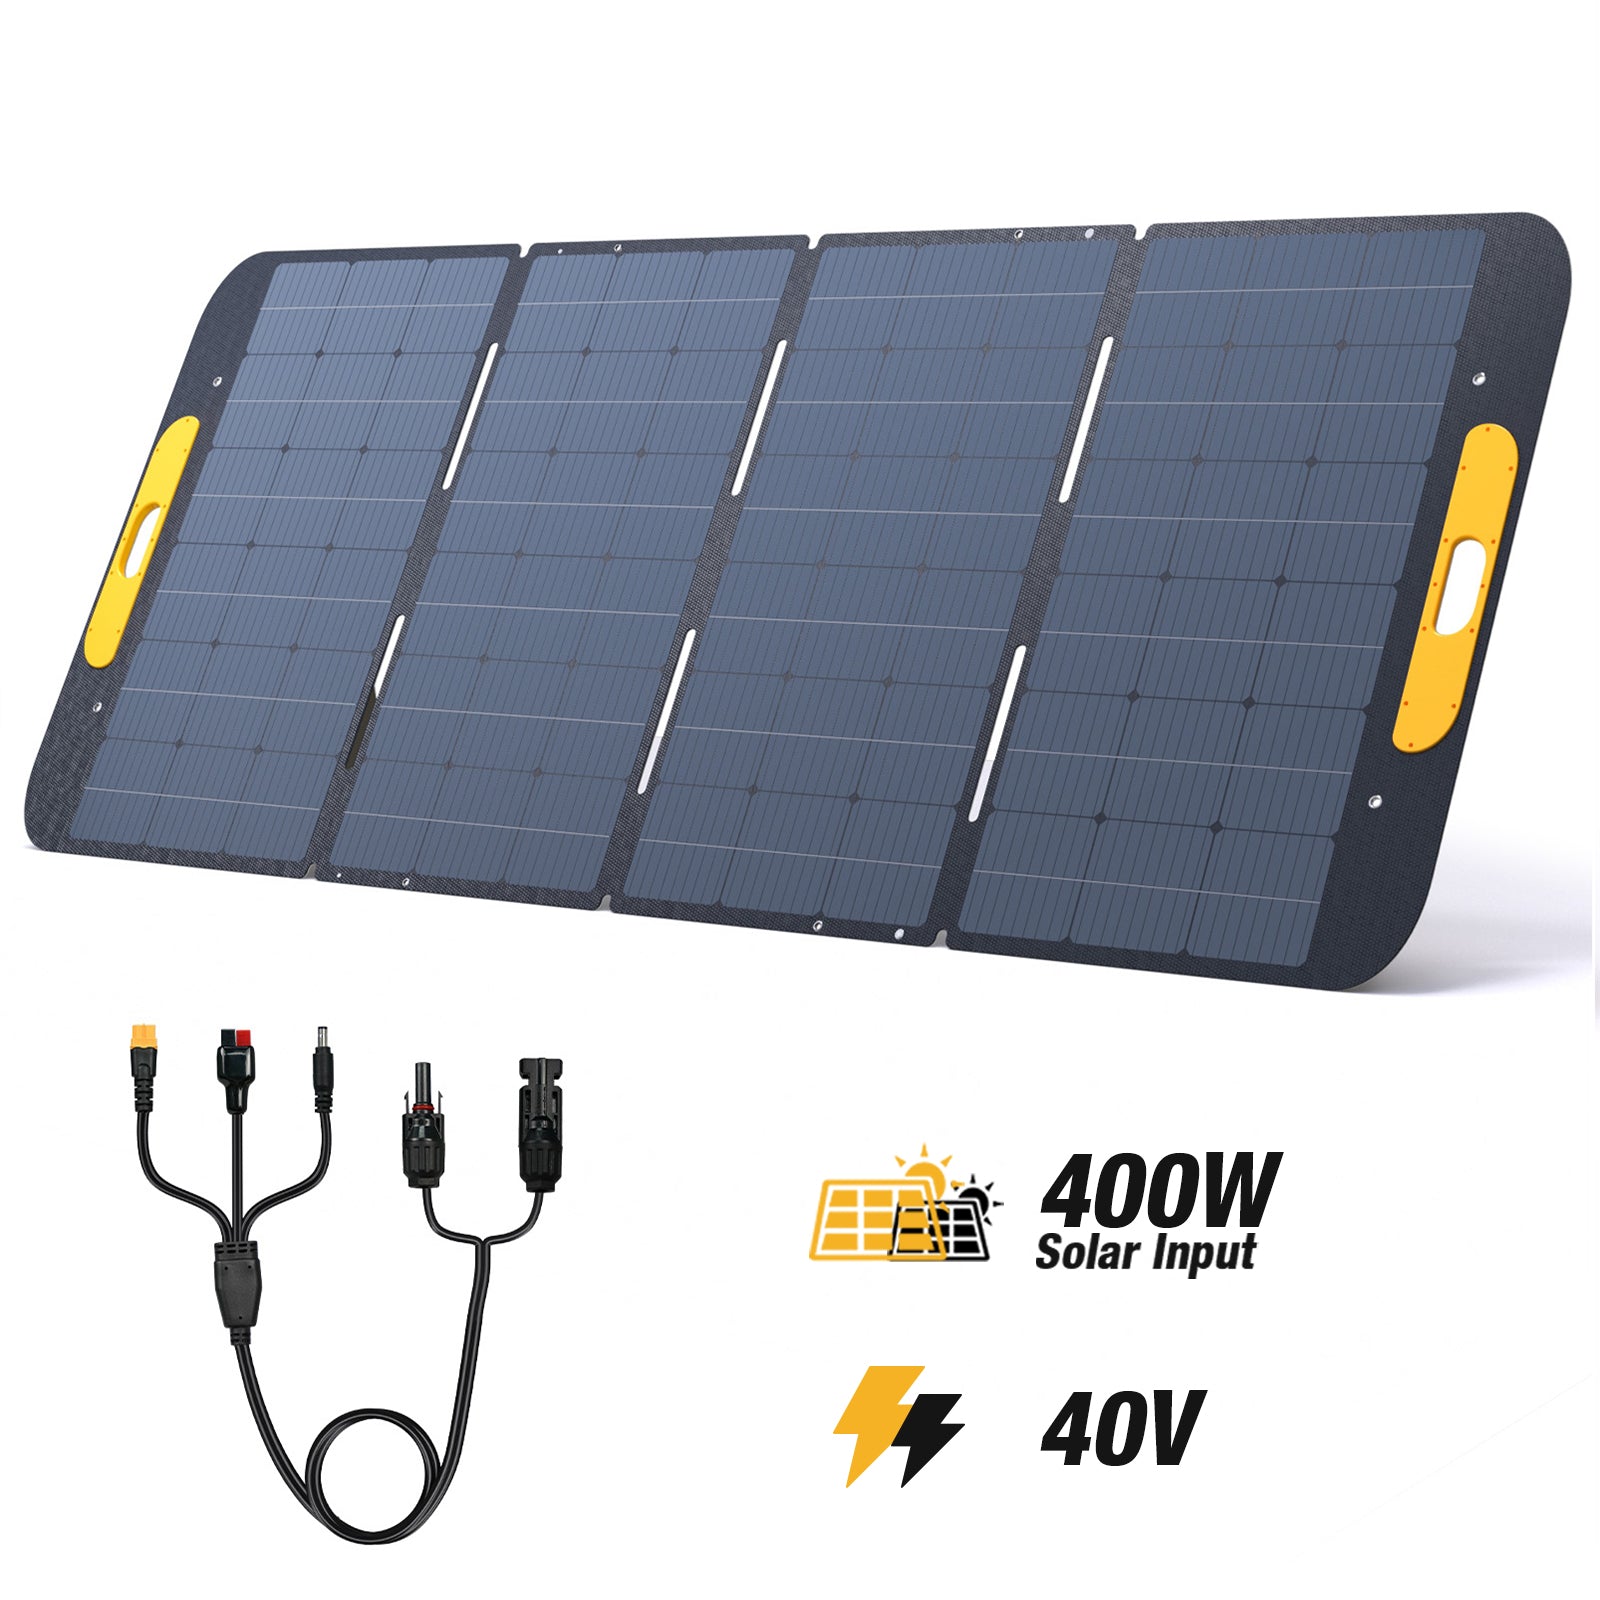 VTOMAN VS400 Pro Portable Solar Panel 400W 40V